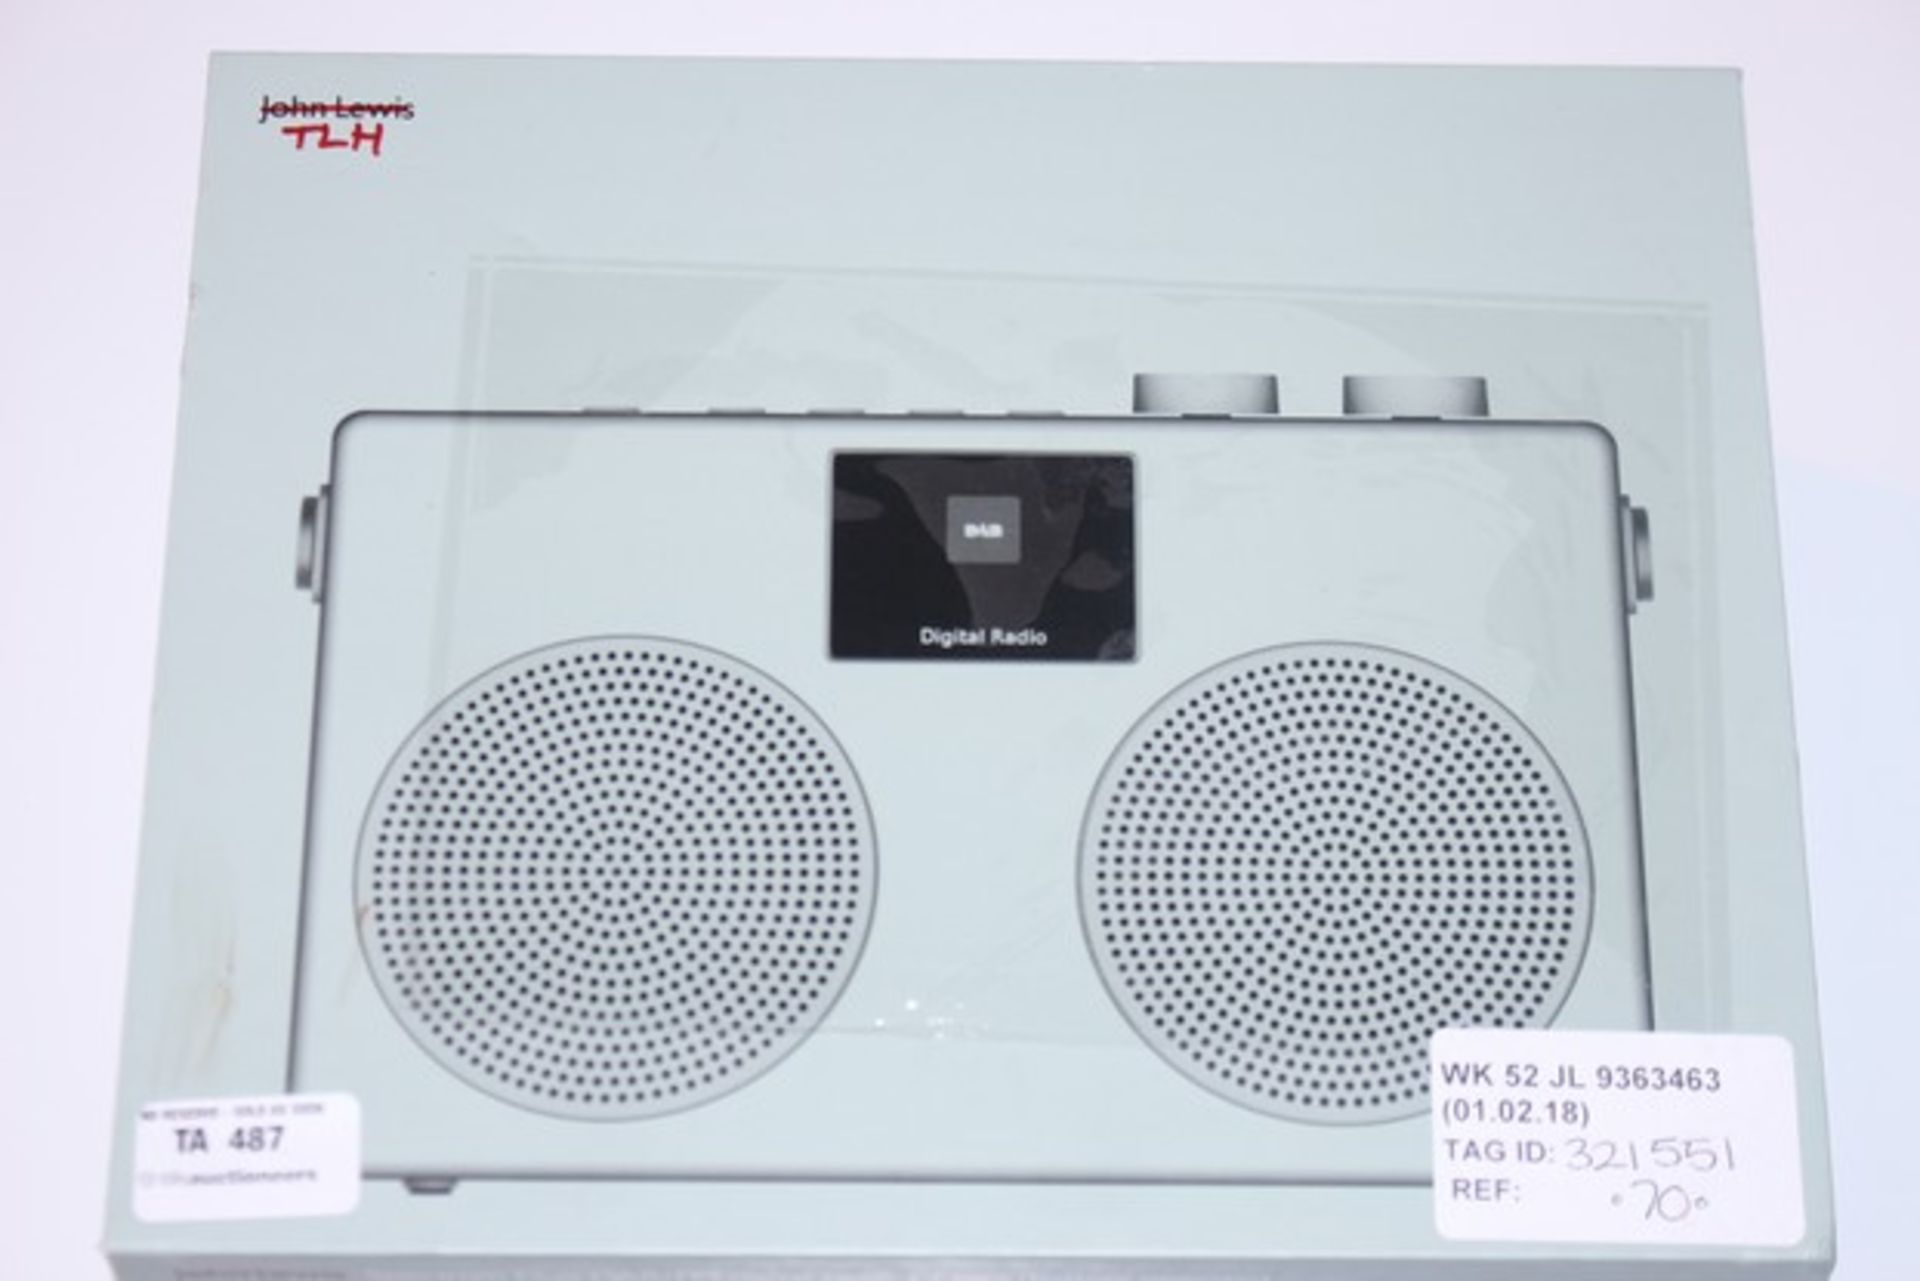 1X SPECTRUM DAB FM DIGITAL RADIO RRP £70 (01/02/18) (321551)